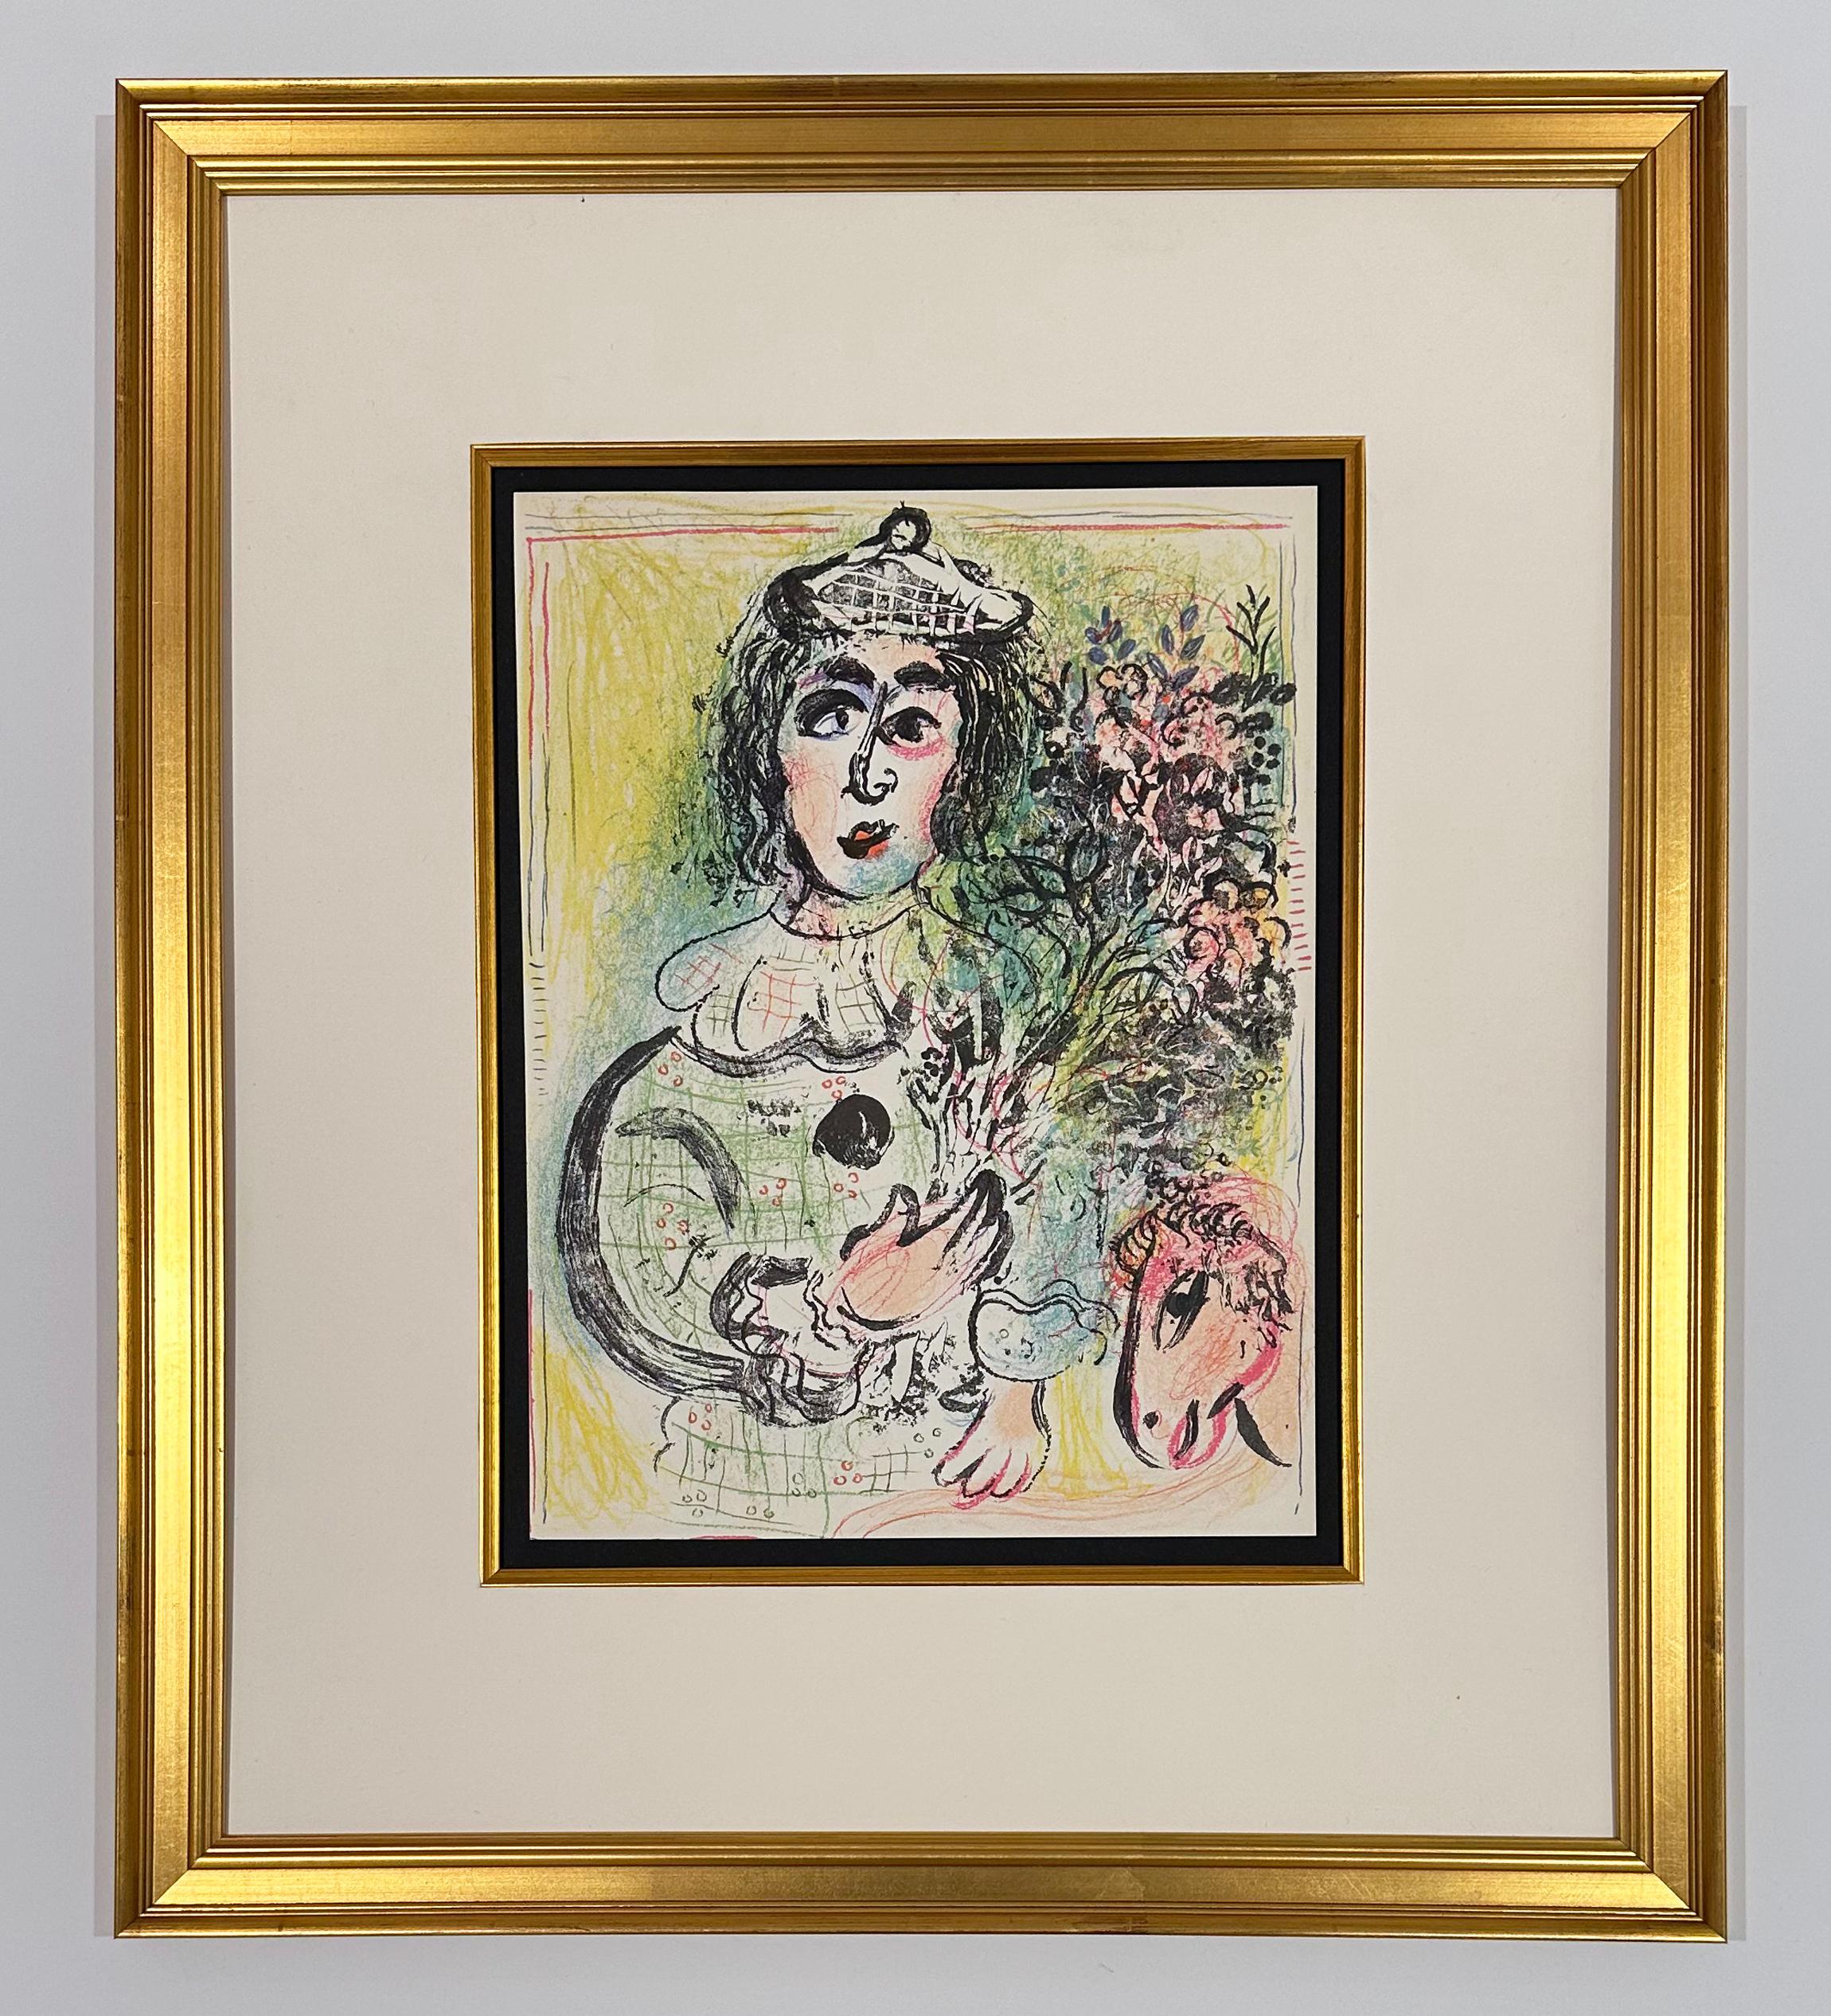 The Clown with Flowers, von 1963 Mourlot Lithographe II – Print von Marc Chagall